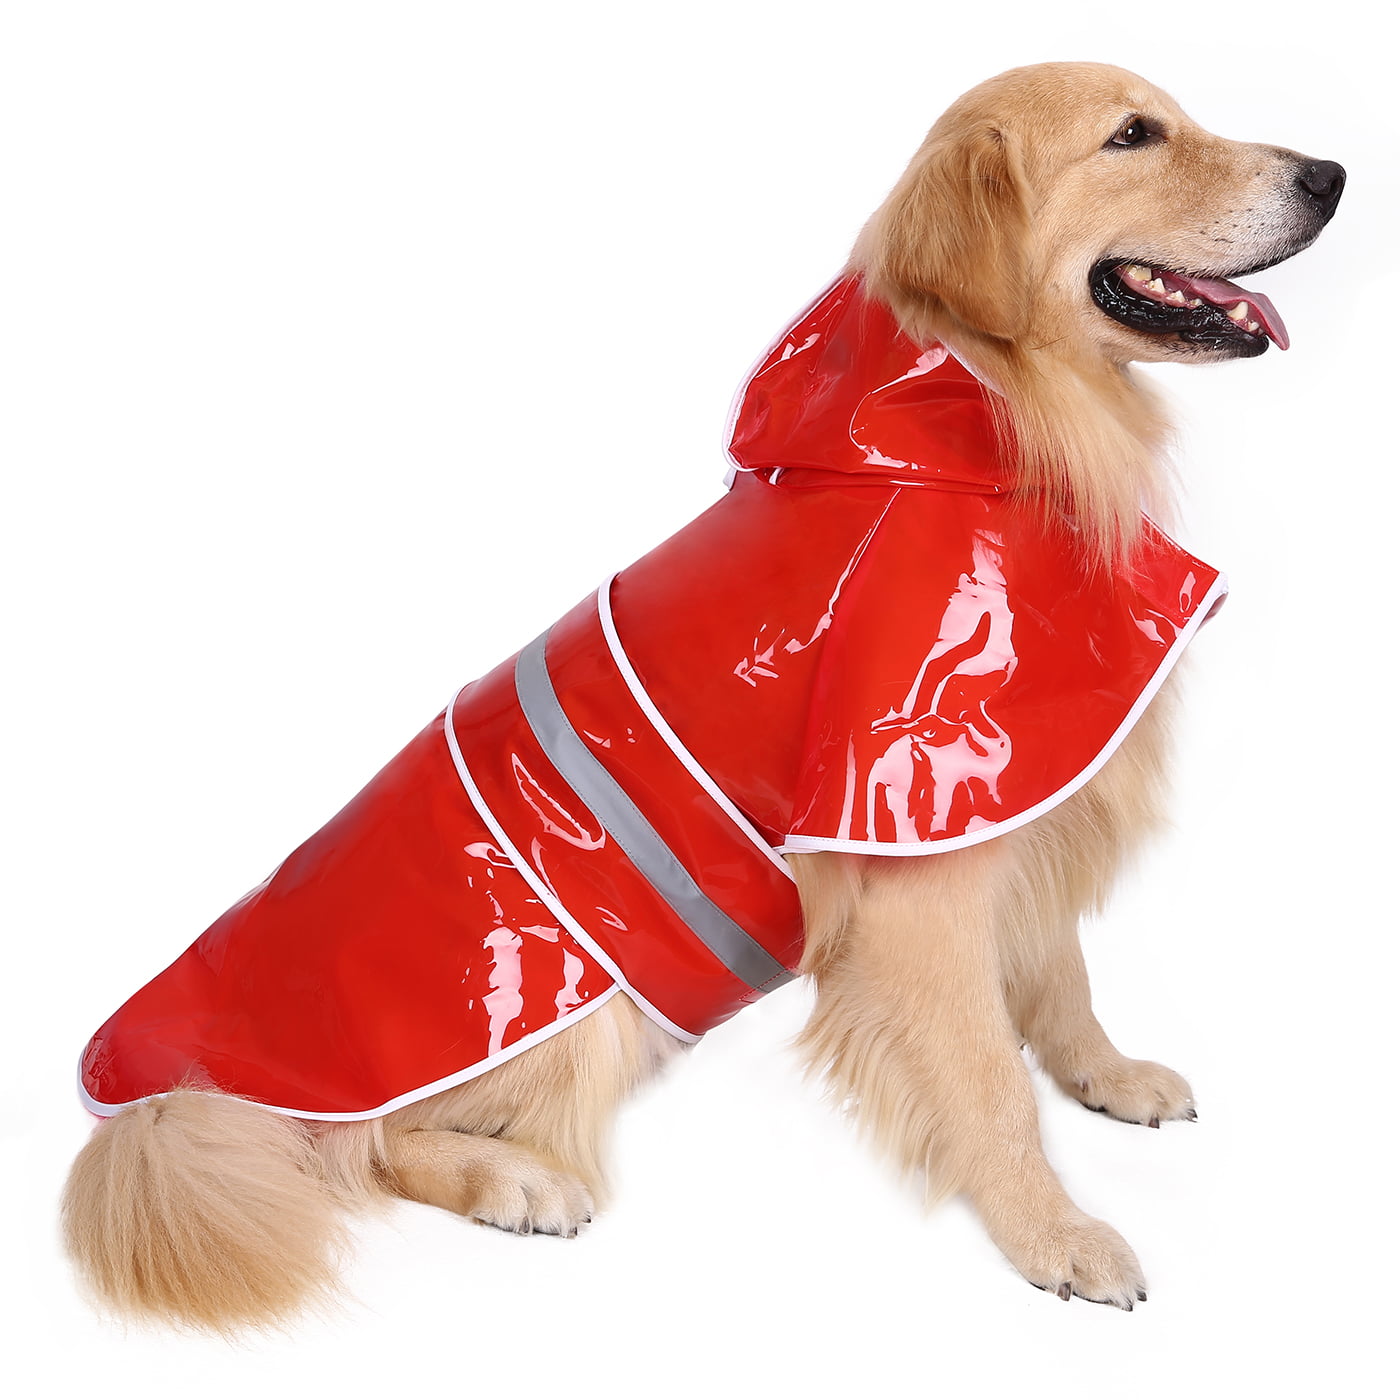 Waterproof Pet Dog Puppy Raincoat Outdoor Jacket Rainwear Transparent Hood Coat for Small Medium Dogs Black XS Ordertown Transparent Pet Dogs Raincoat